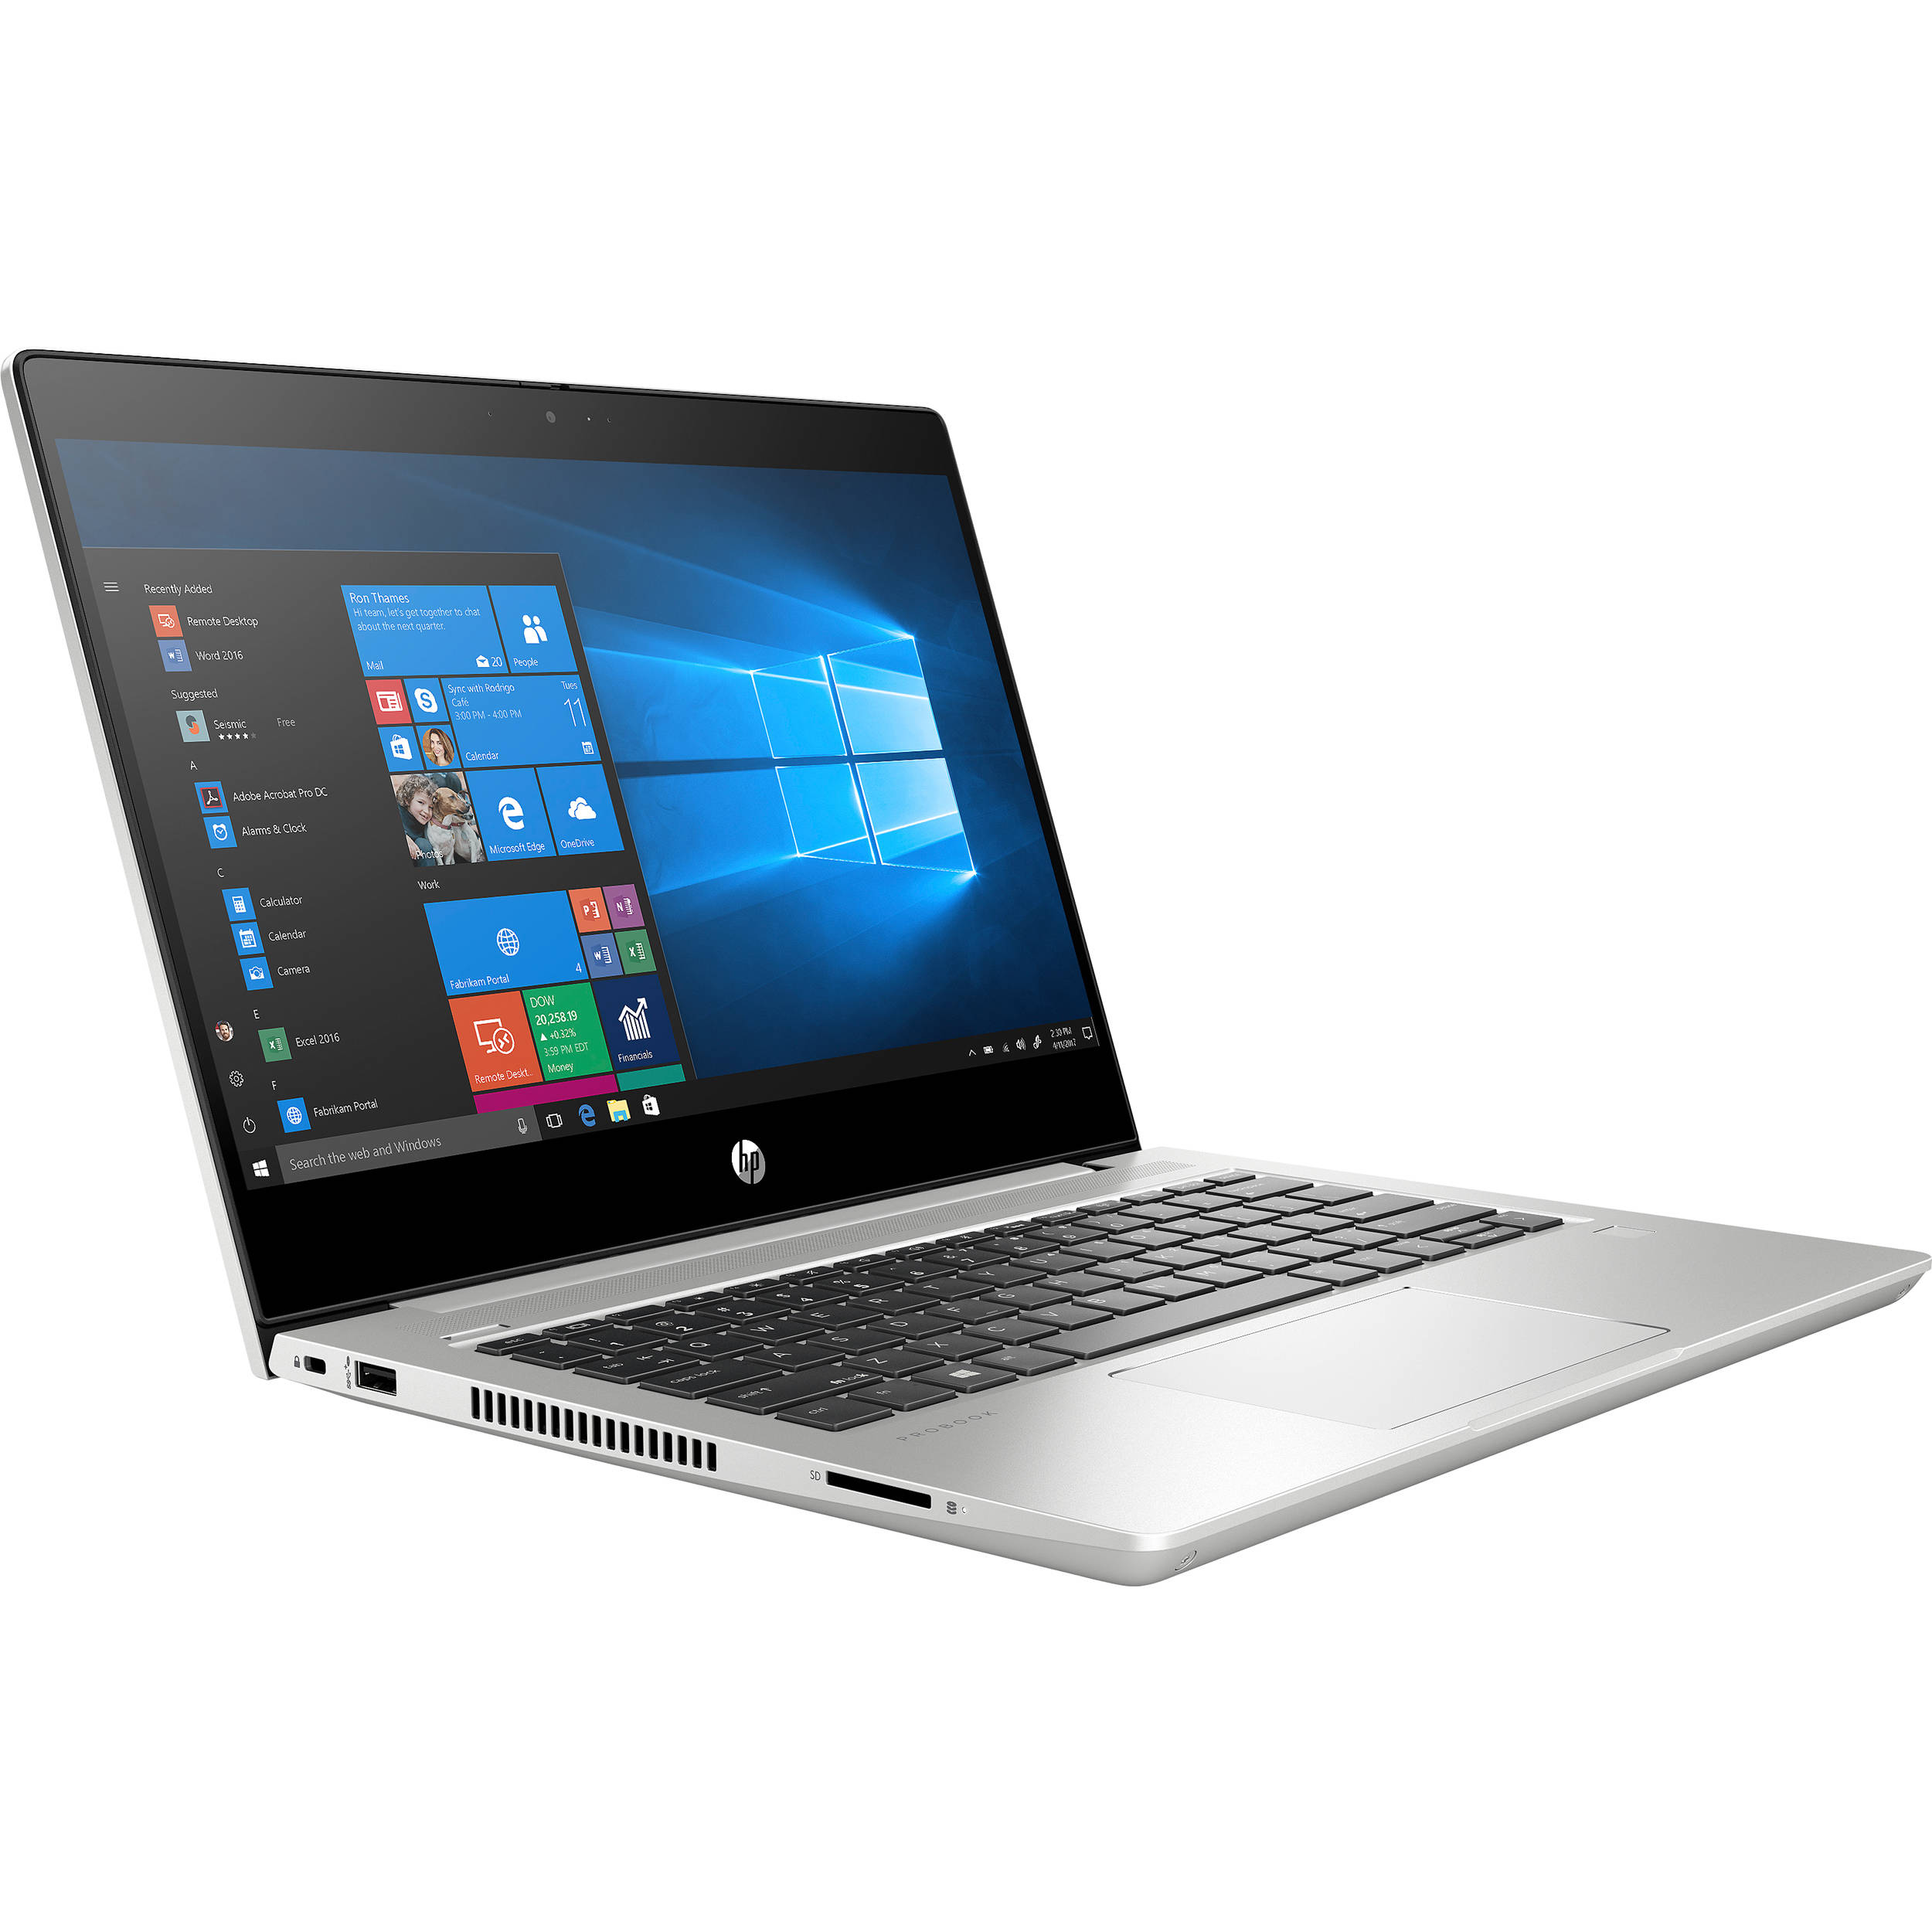 HP ProBook 430 G7 13.3' HD i5-10210U 8GB 256GB SSD WIN10 PRO UHDGraphics USB-C HDMI Backlit Keyboard 3CELL 1.49kg W10P Notebook (9WC61PA)